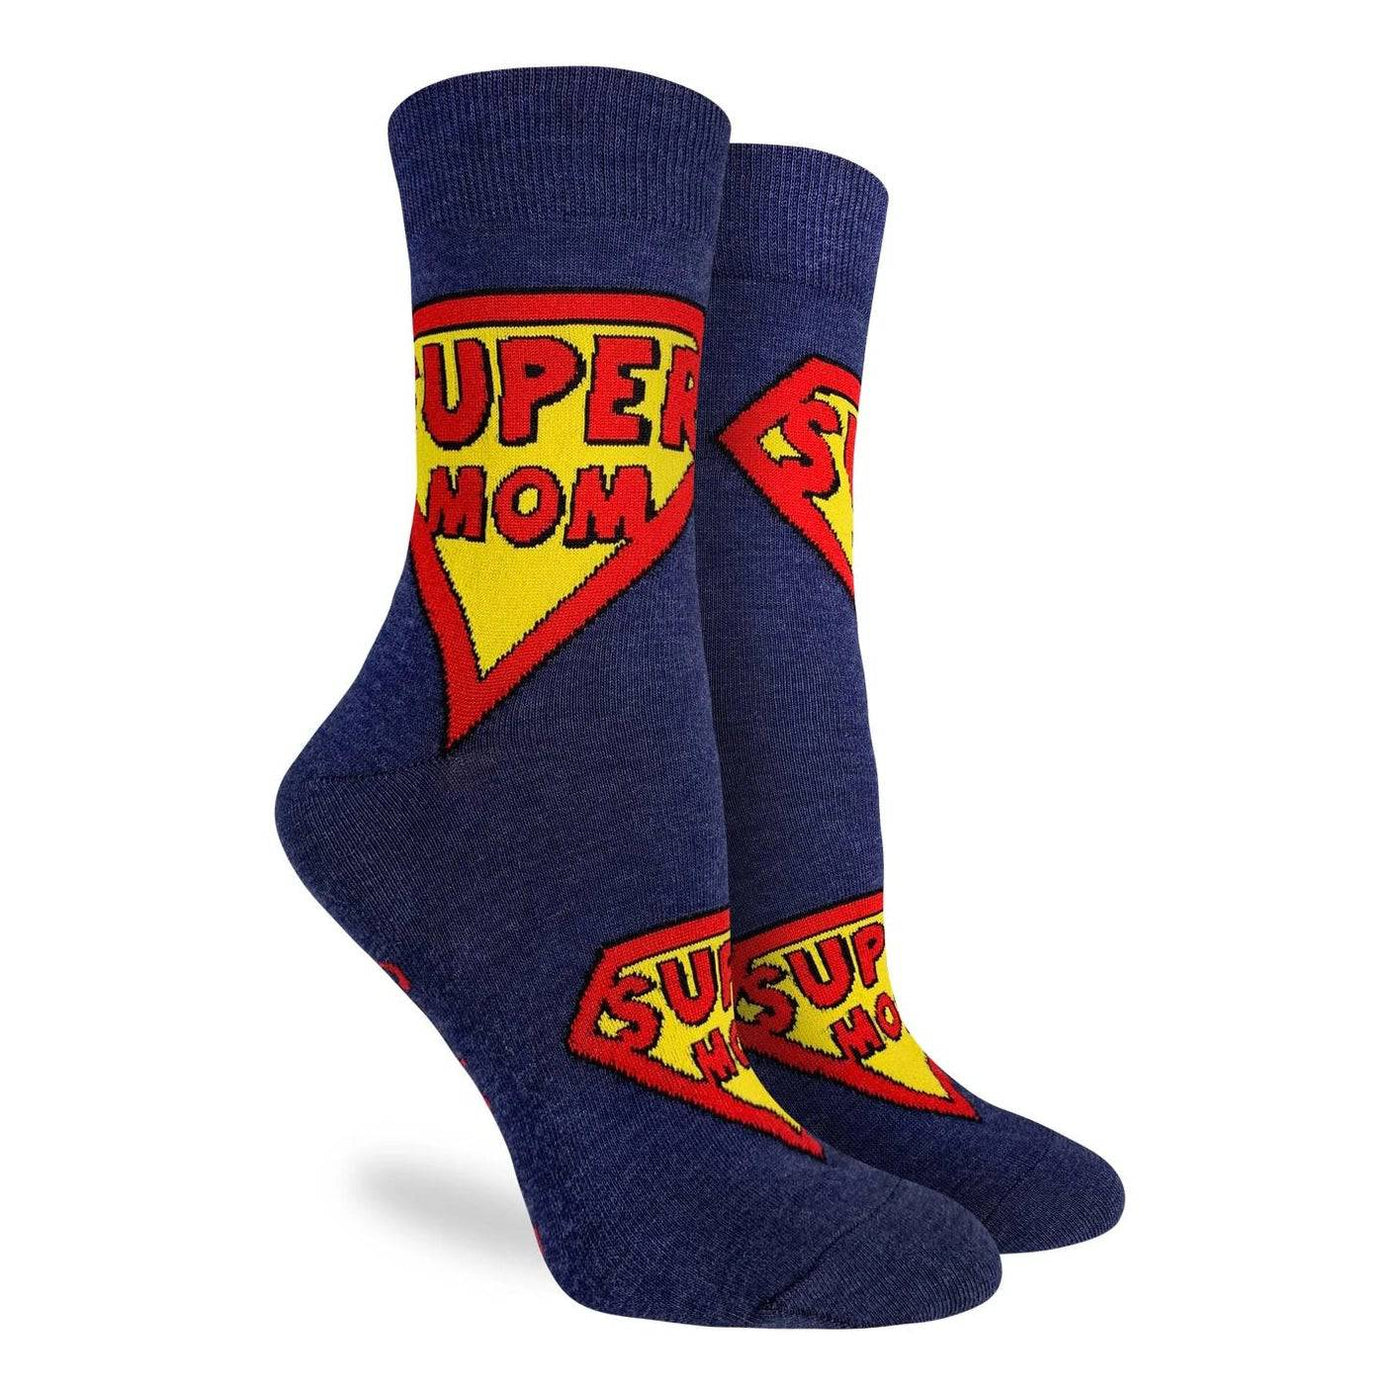 Women's Super Mom Socks - The Local Space